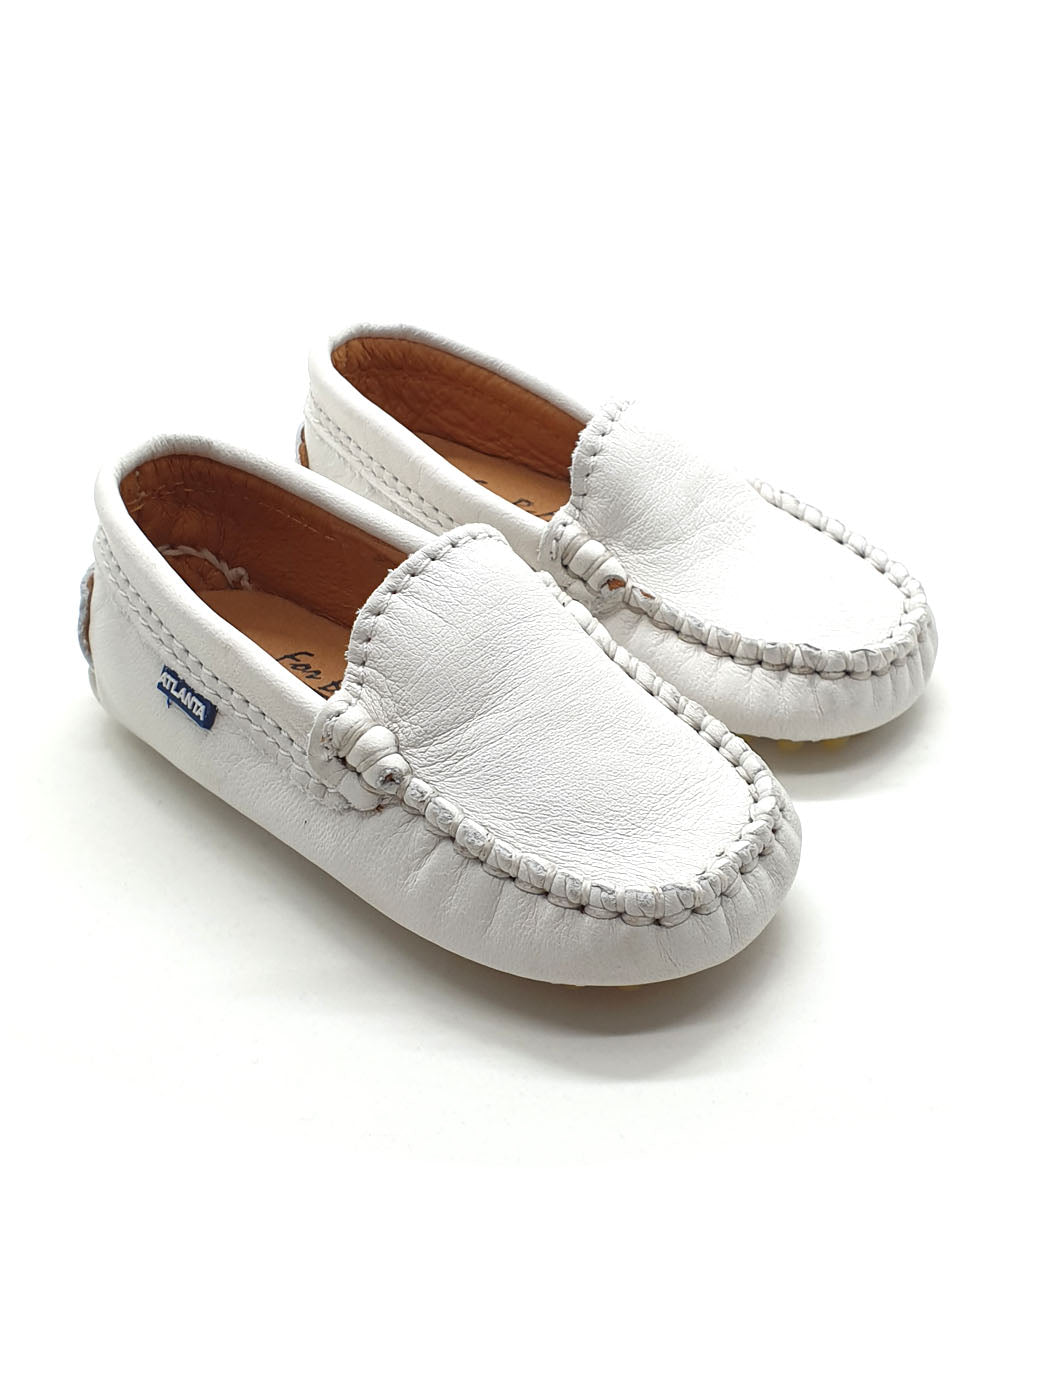 Atlanta Mocassin-Baby Shoes Moccasins White-015B007